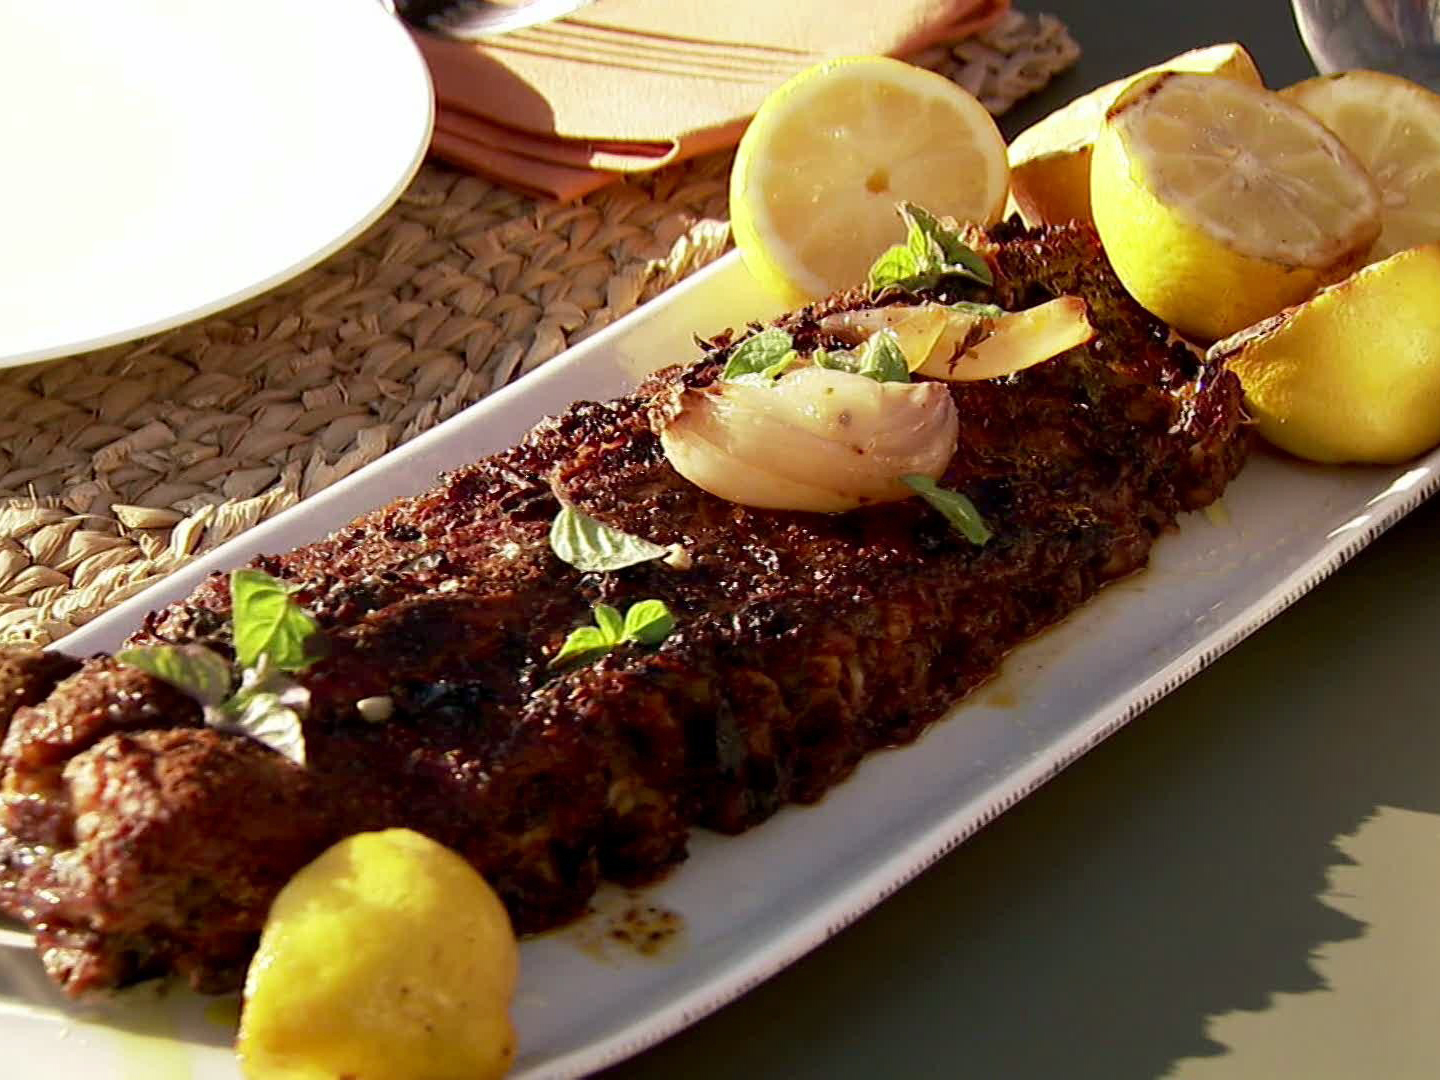 https://www.foodnetwork.com/content/dam/images/food/fullset/2013/11/4/0/BX0908H_smoked-pork-ribs-recipe_s4x3.jpg